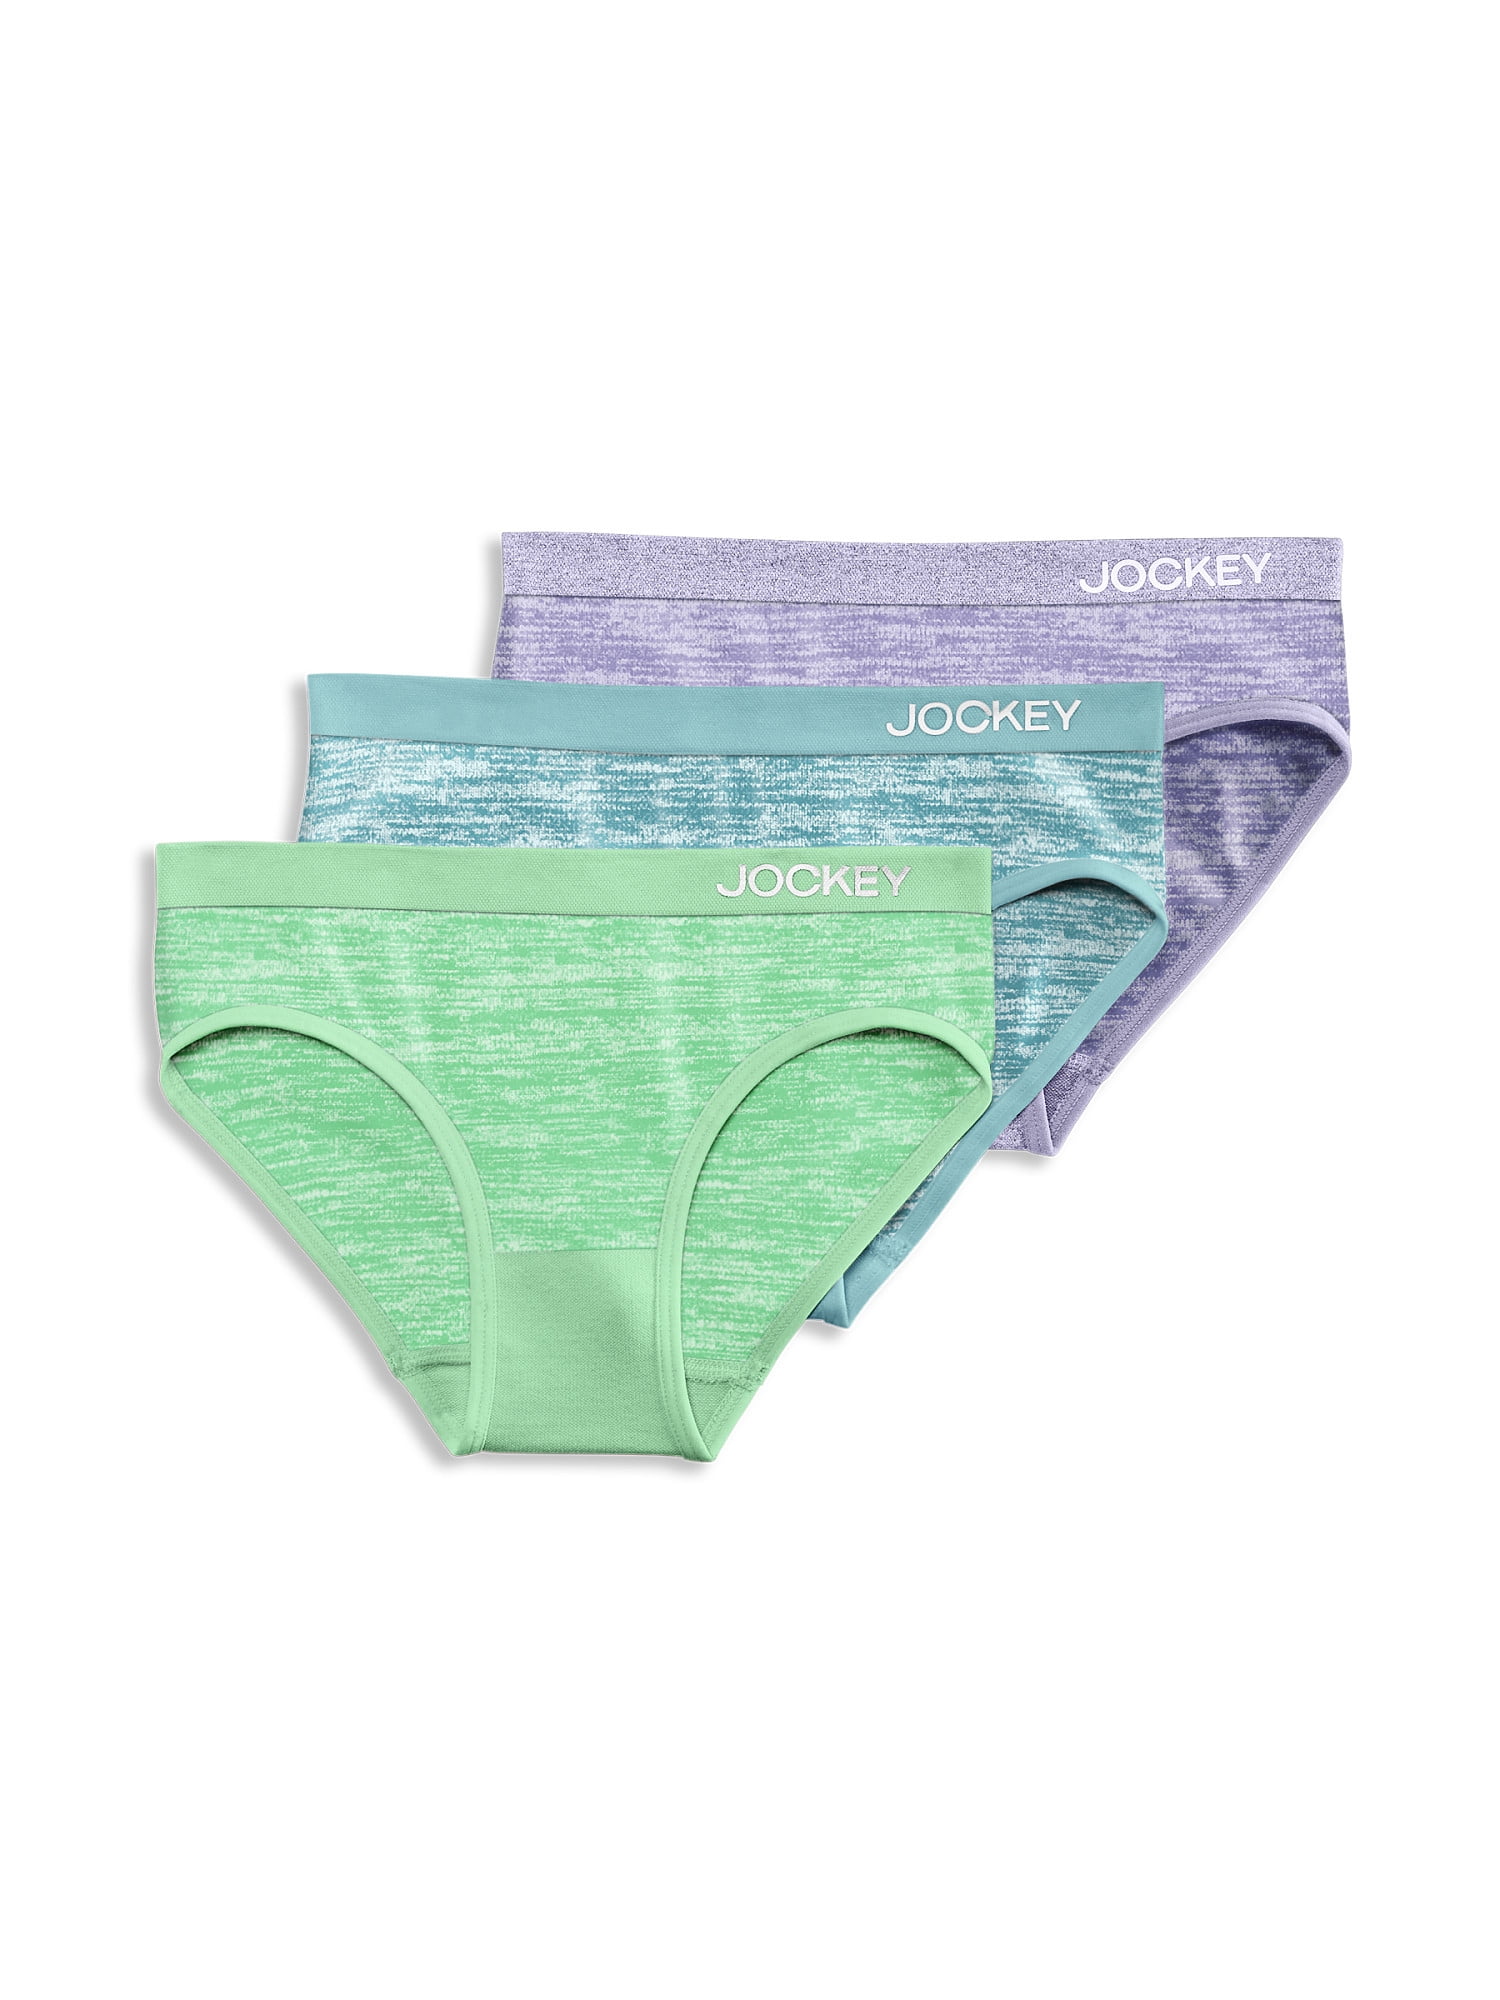 Jockey Essentials Women's Seamfree Hipster Panties, 3-Pack, Sizes